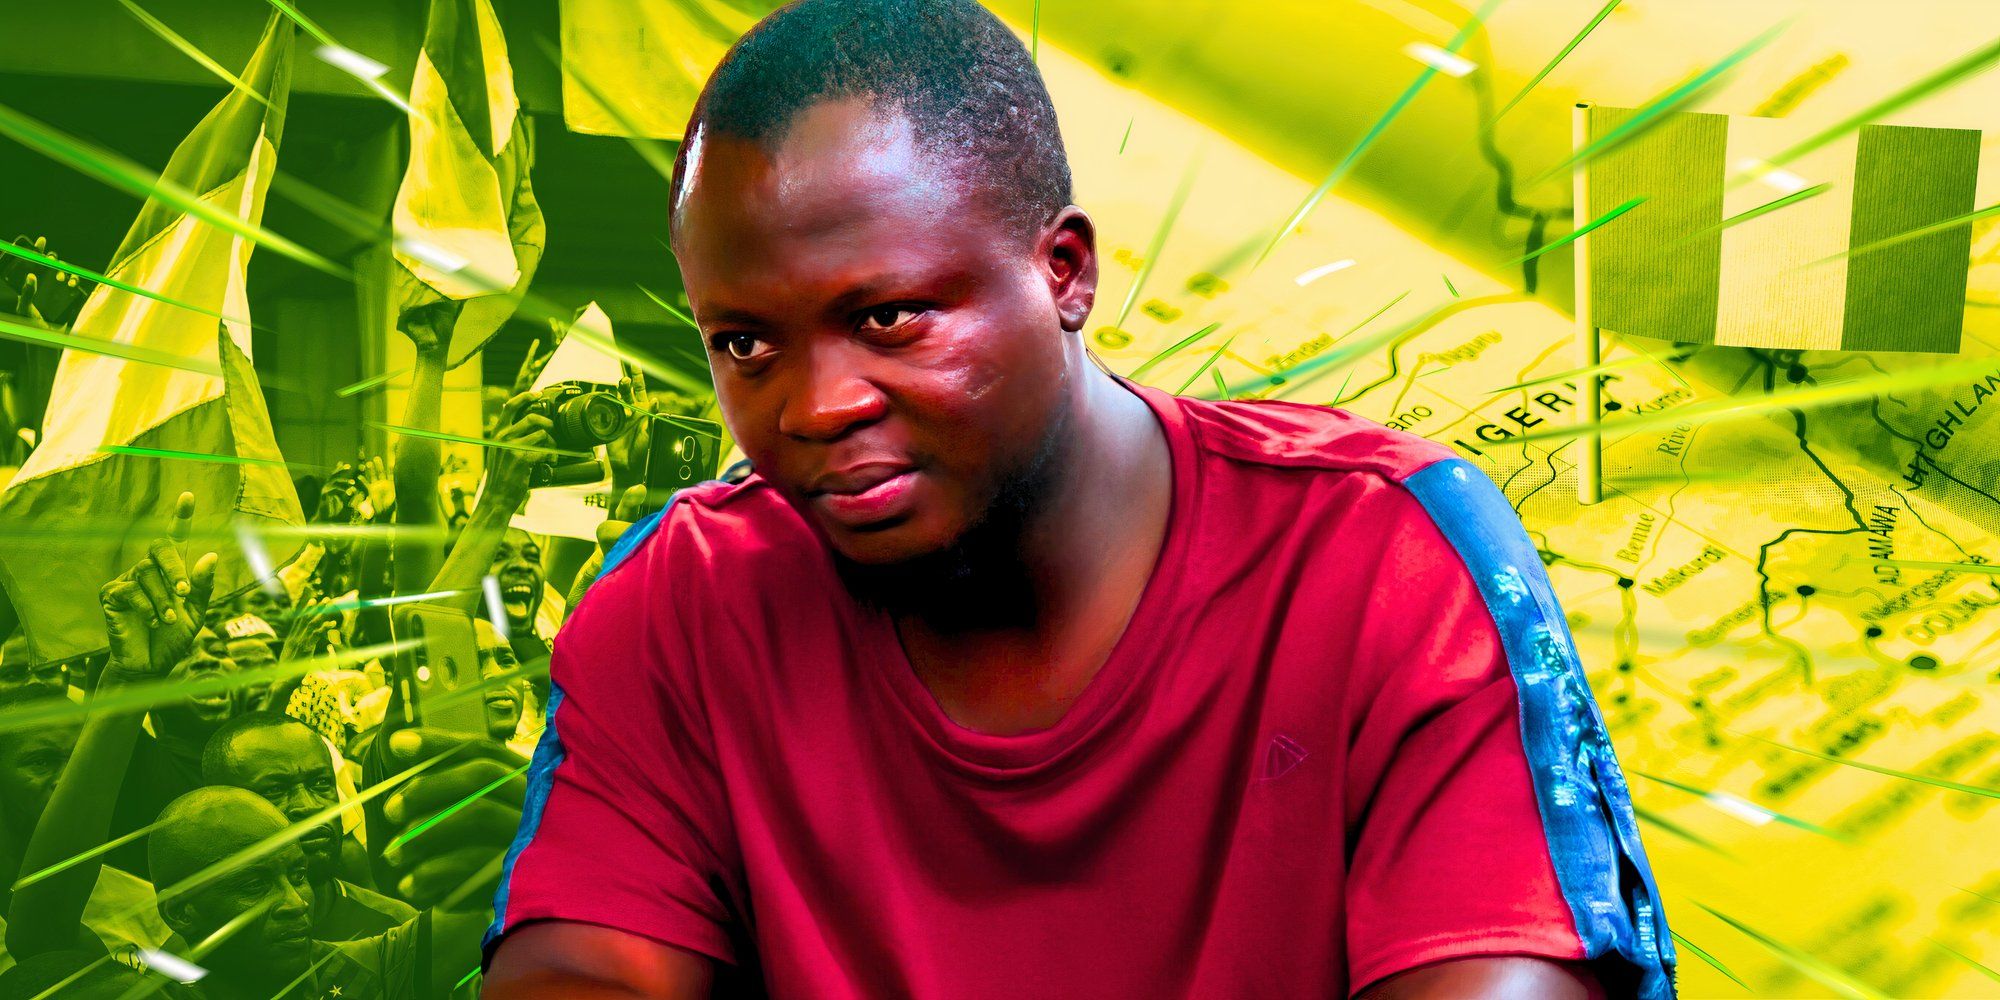 Montage Of Michael Ilesanmi 90 Day Fiancé wearing red shirt looking slim with neon green backdrop